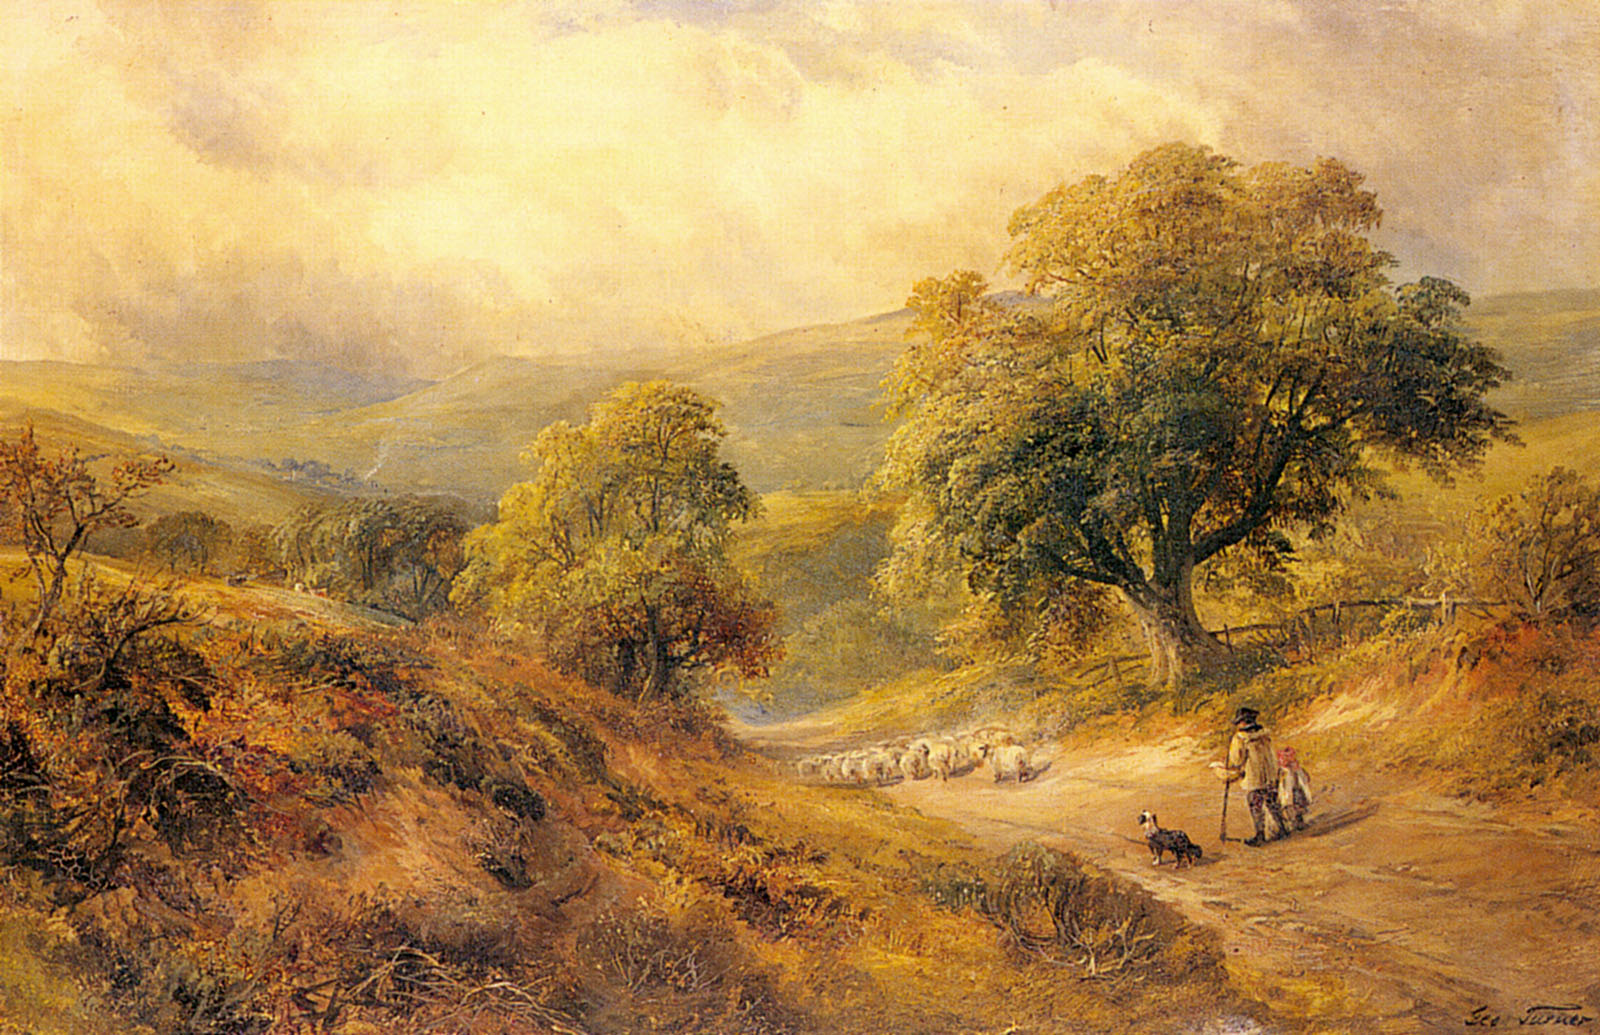 Painting of George Turner artist, George Turner paintings